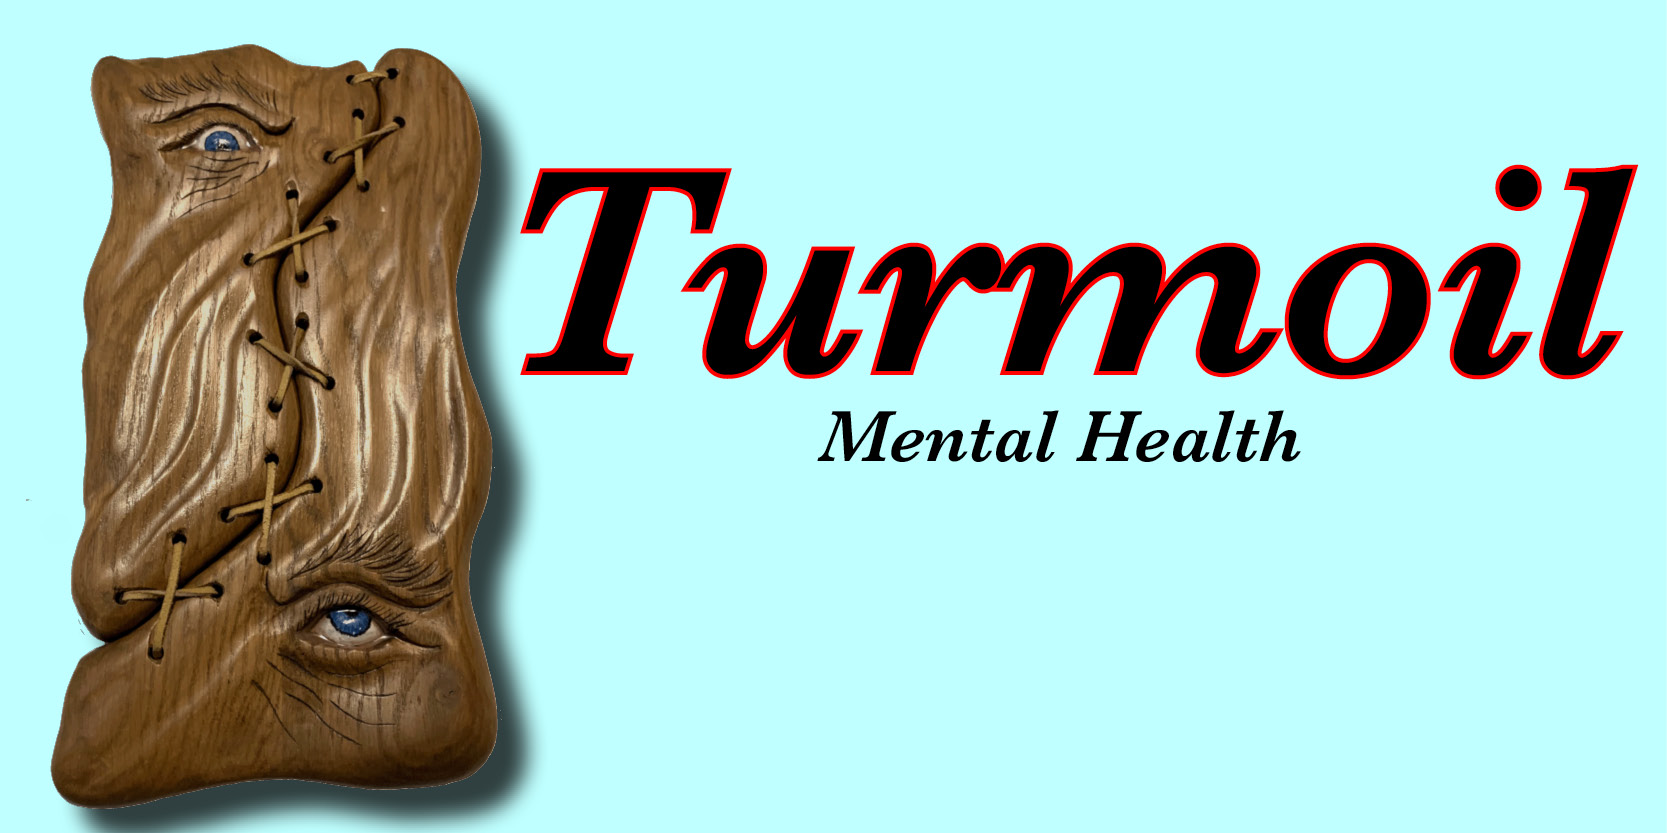 Turmoil mental health sculpture, wood, wall art, life, COVID-19 years